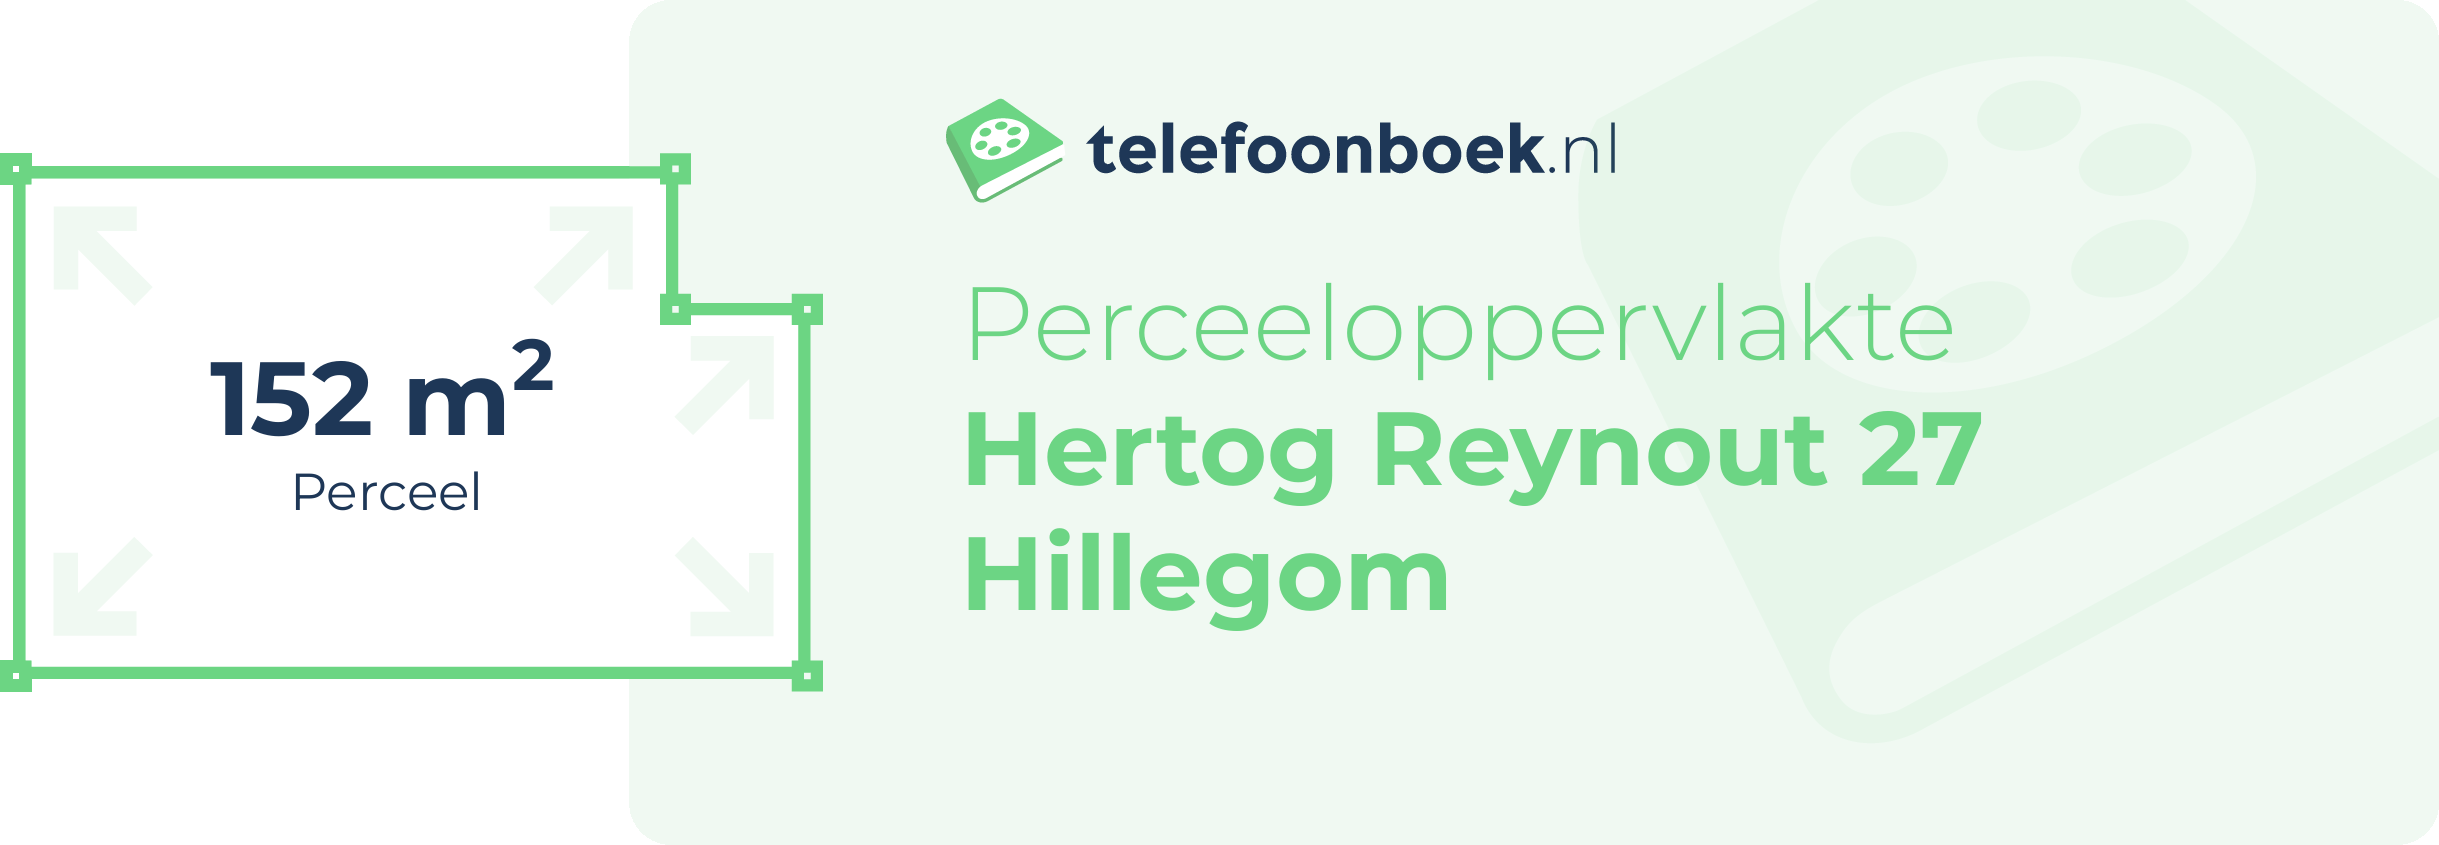 Perceeloppervlakte Hertog Reynout 27 Hillegom